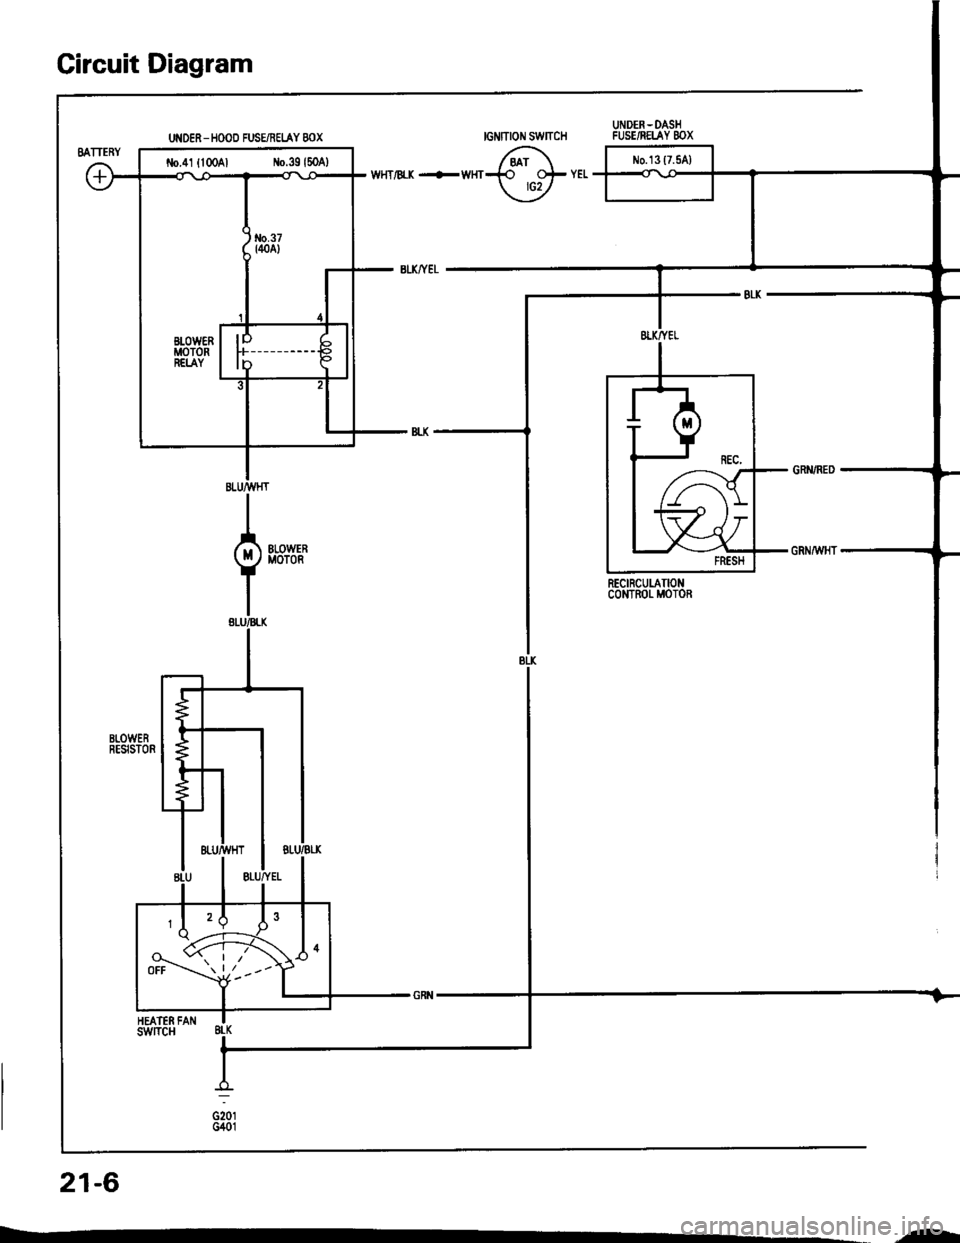 HONDA INTEGRA 1994 4.G Workshop Manual UNOER - HOOO FUSE/REI.AY 8OX
Circuit Diagram
WtlT/BtK.+WtfT
UiIDEN - OASHFUSE/RETAY 8OX
RECIRCUI.ATIONcoMTBor- Moron
nrotG401
N0.13 (7.5A1
21-6
-] 